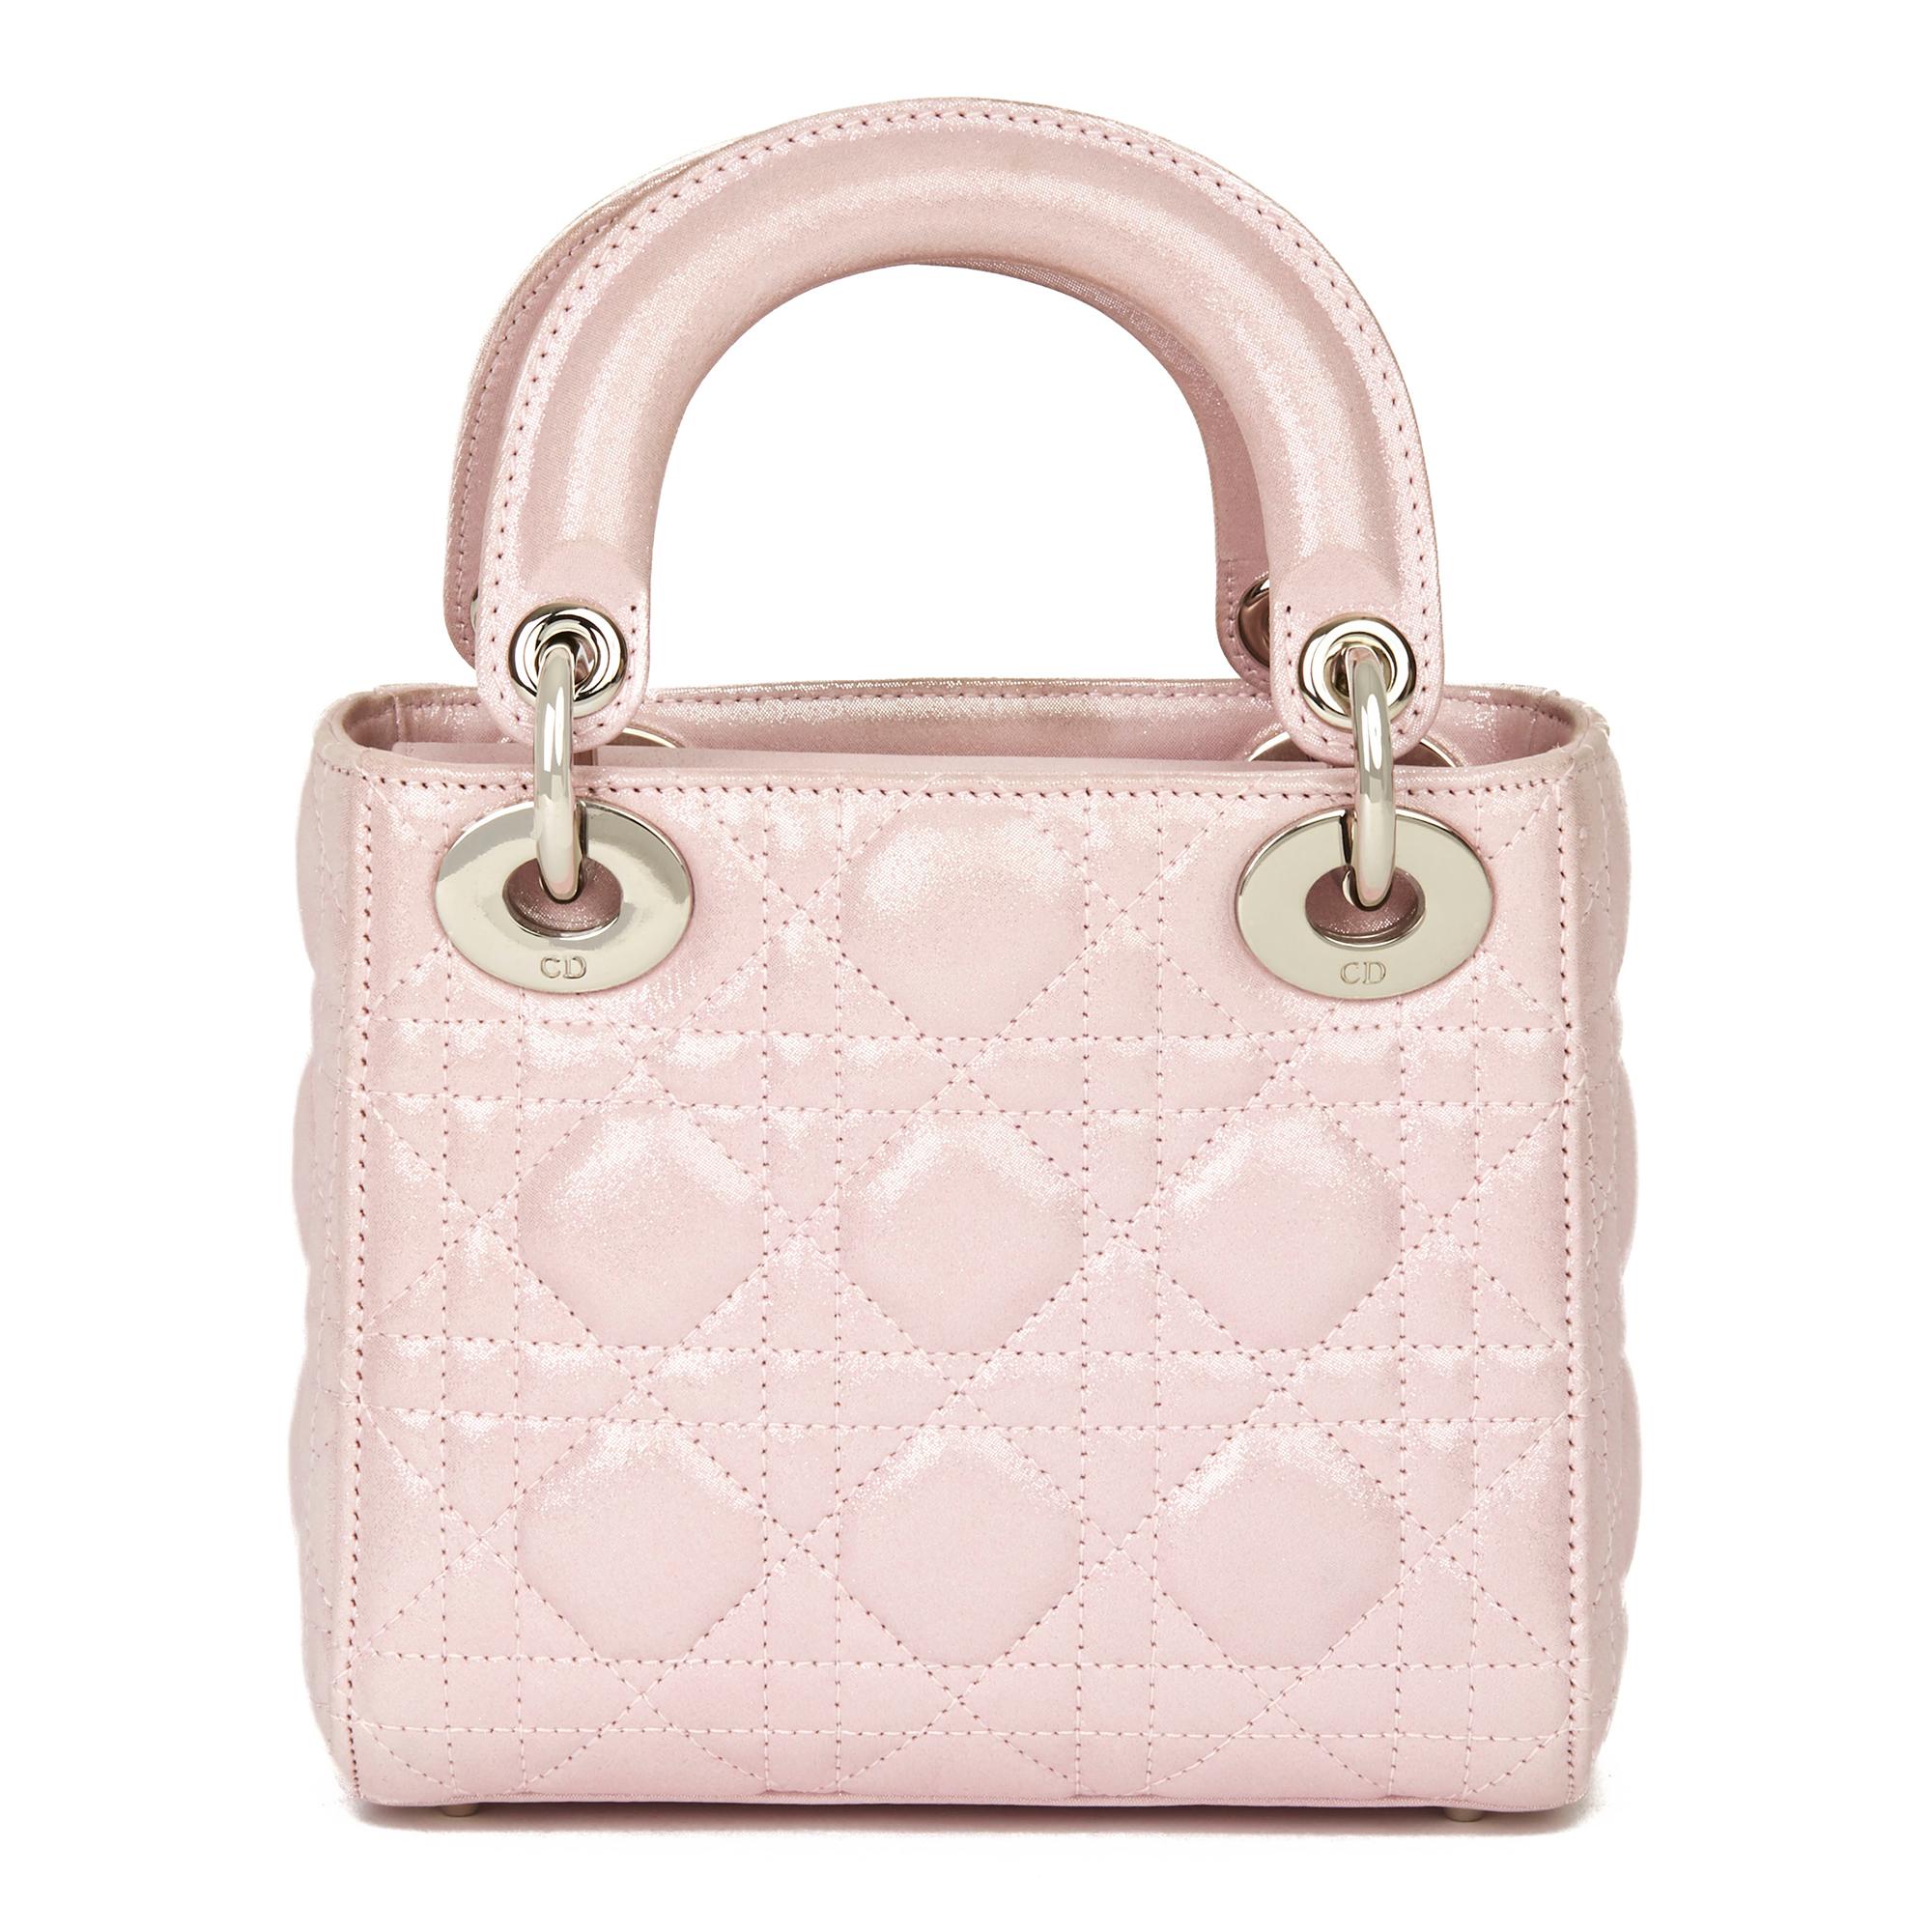 pink lady dior bag